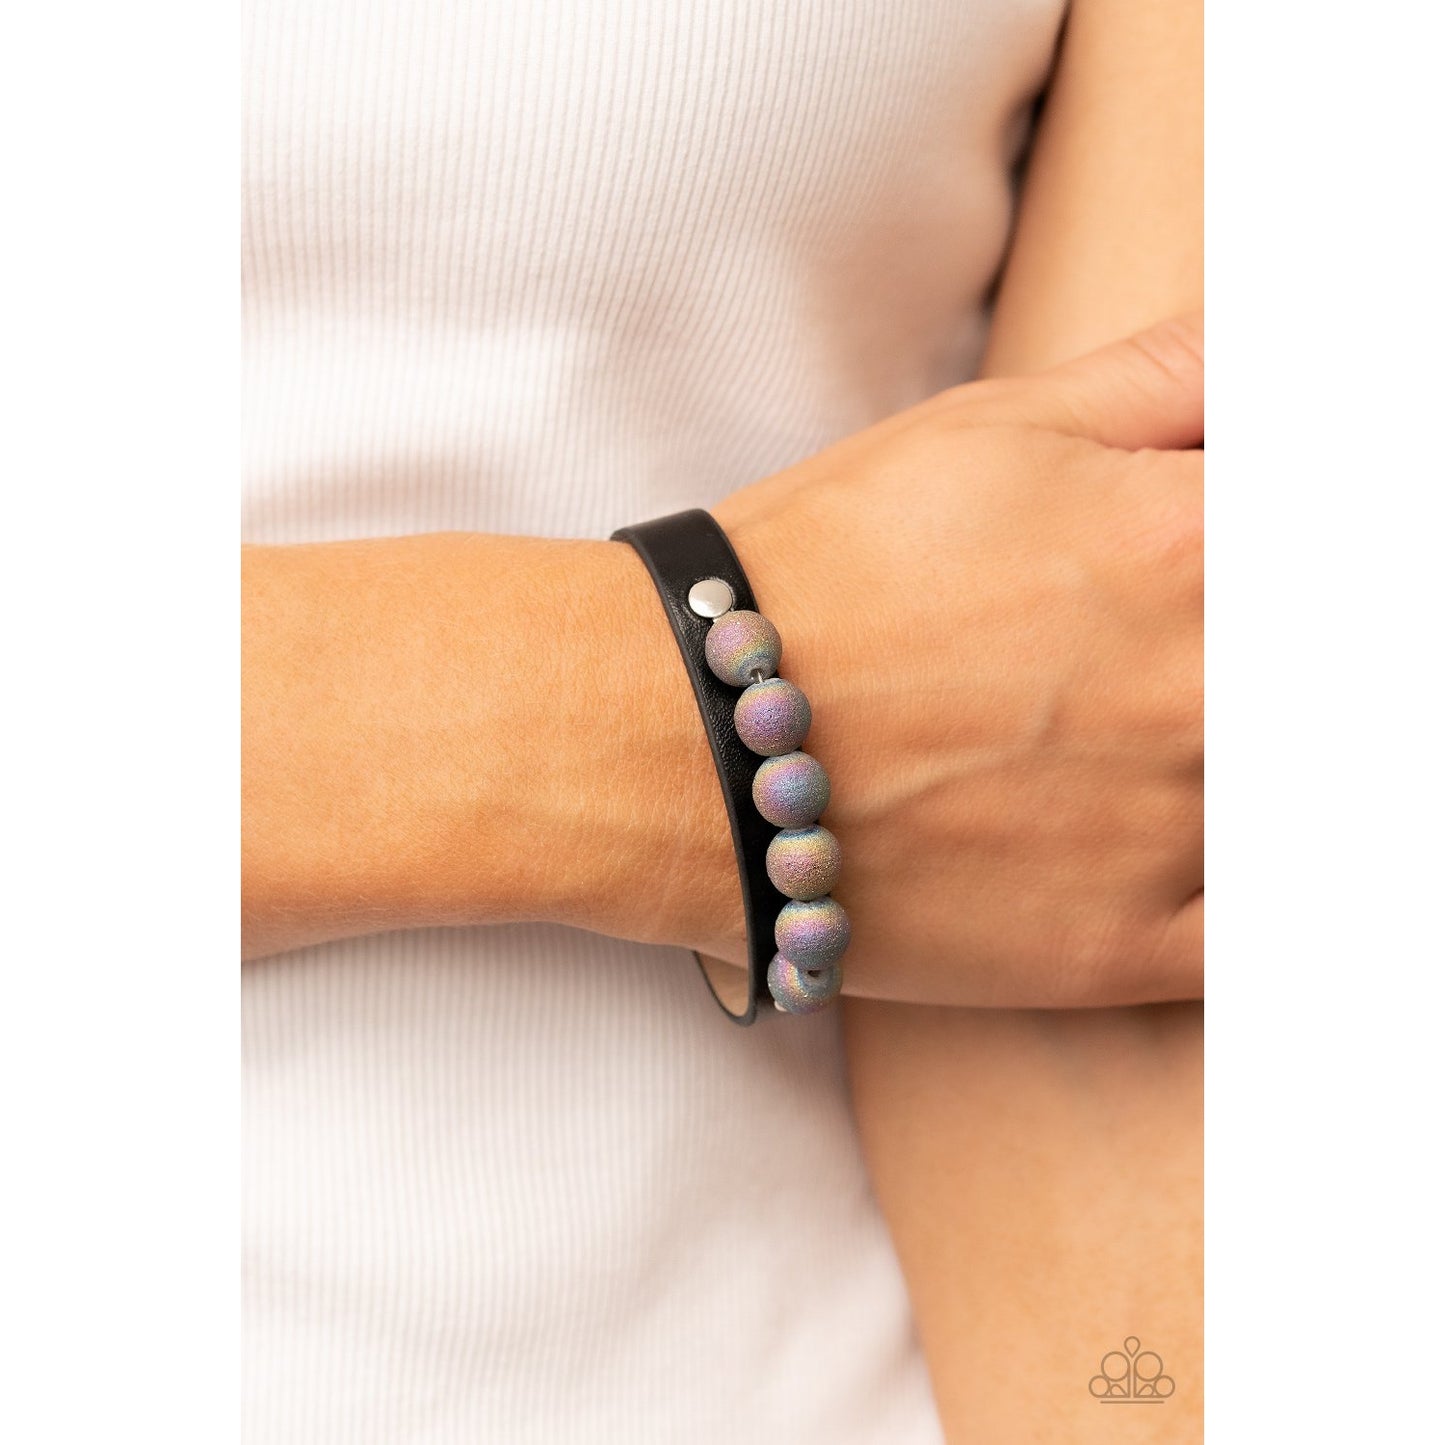 Saturn Safari - Black Multicolored Bead Bracelet - Paparazzi Accessories - GlaMarous Titi Jewels